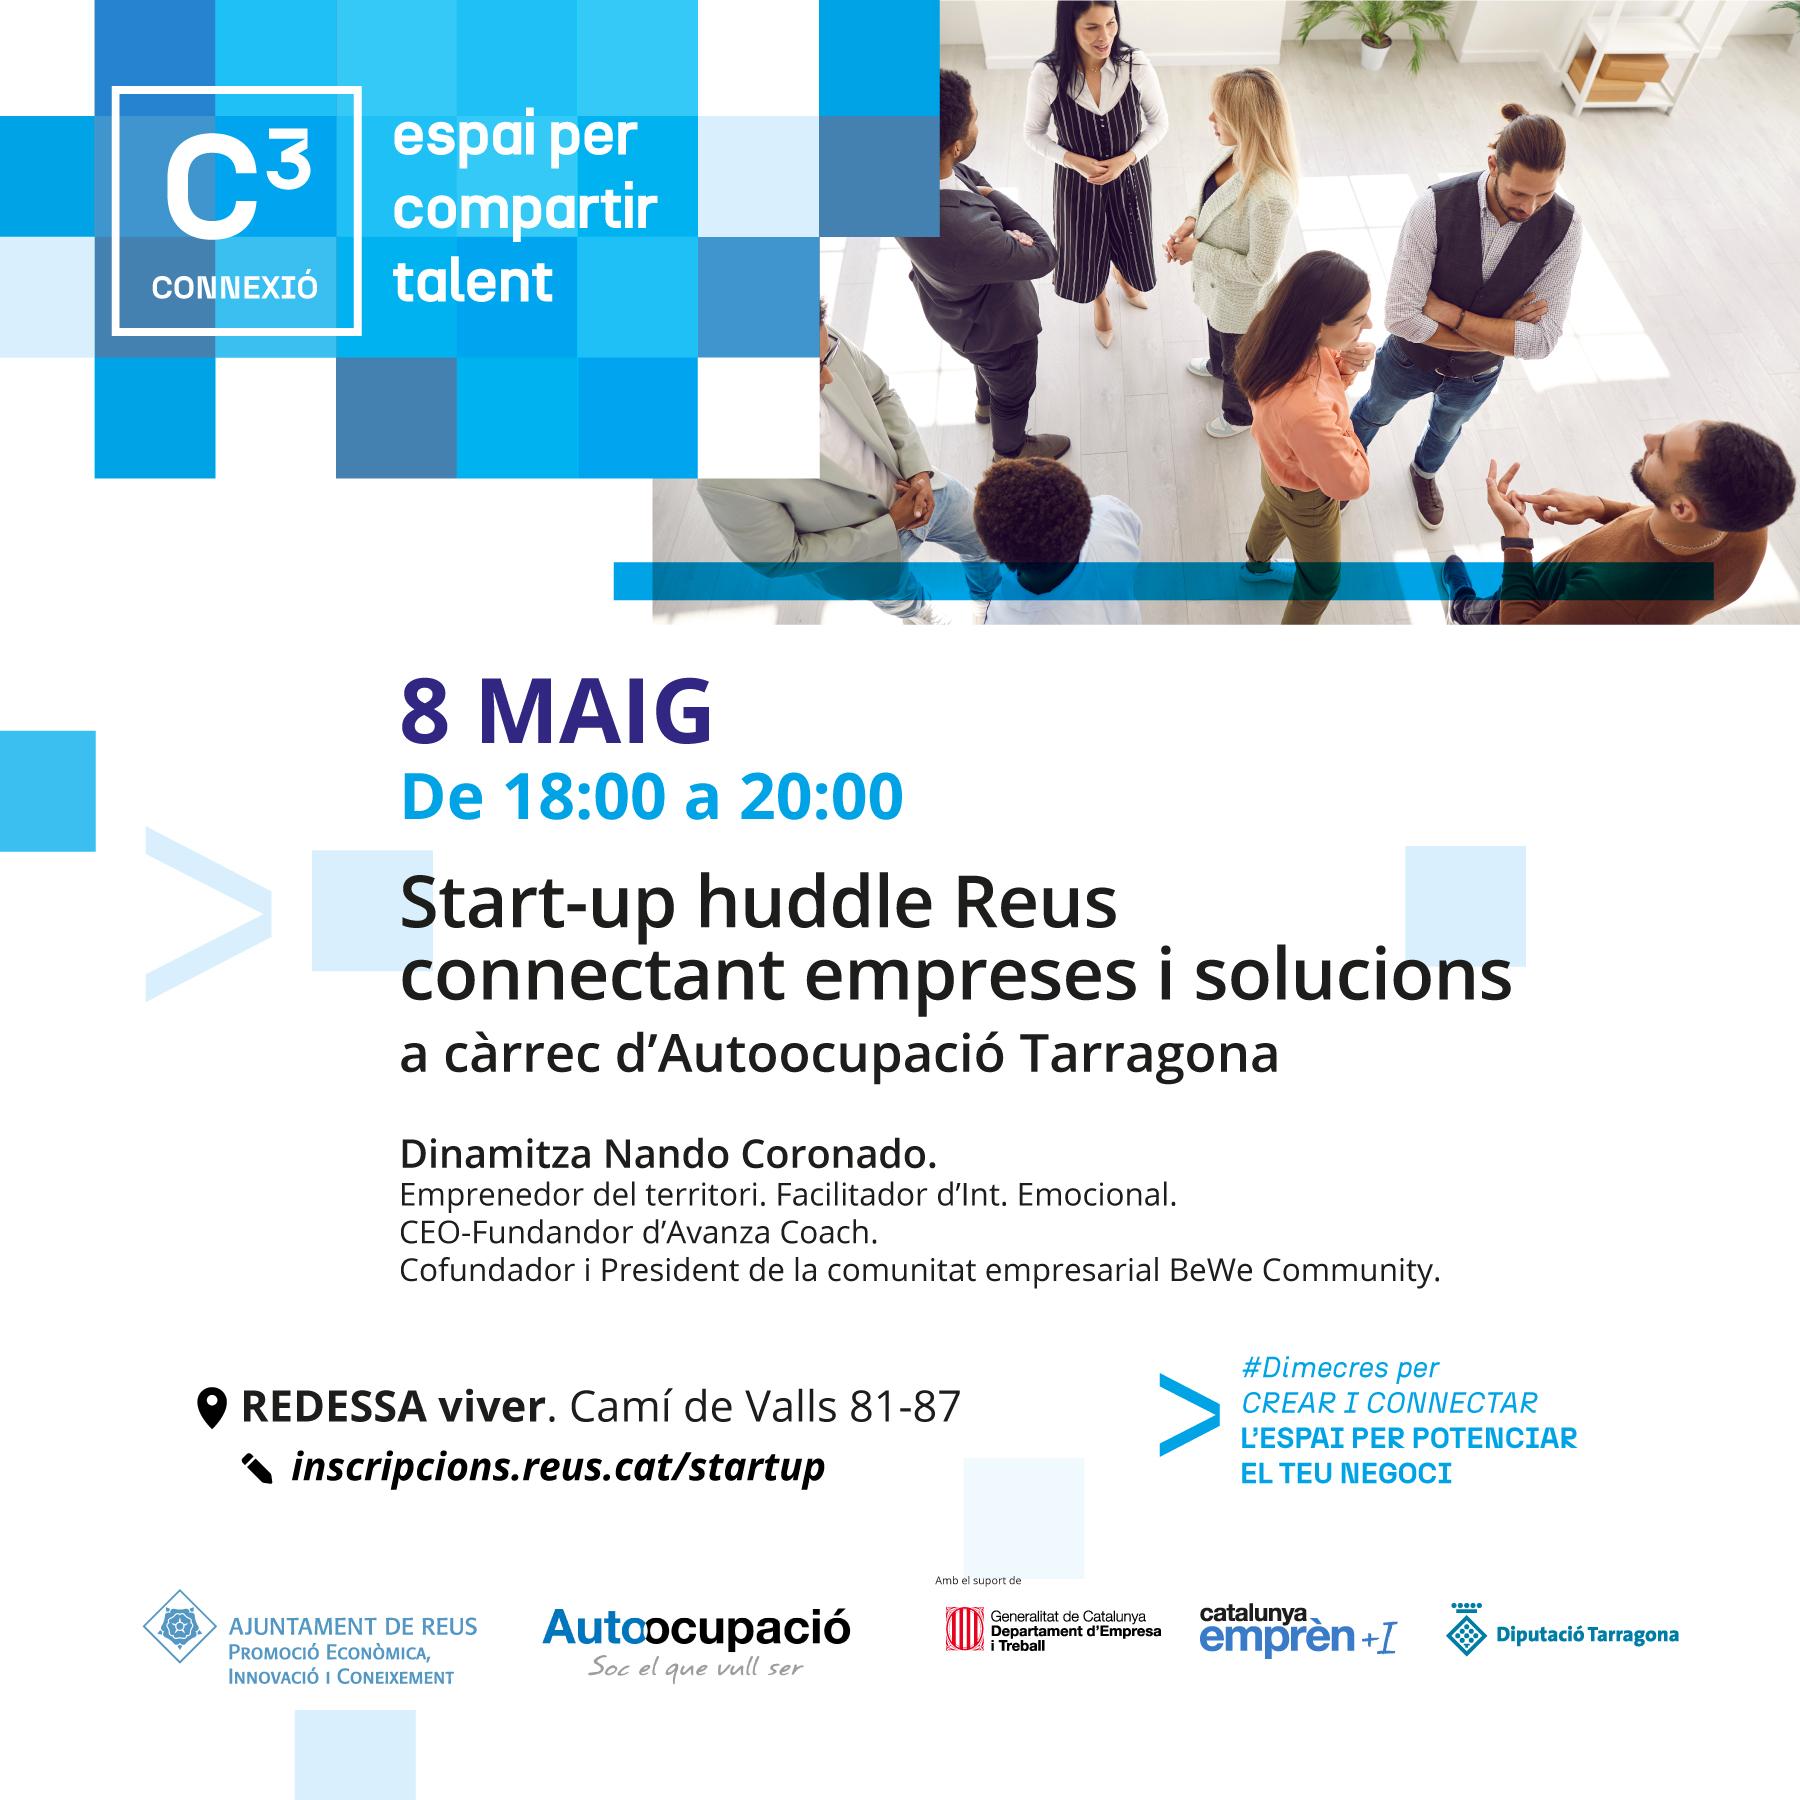 Start-up huddle Reus, connectant empreses i solucionsE